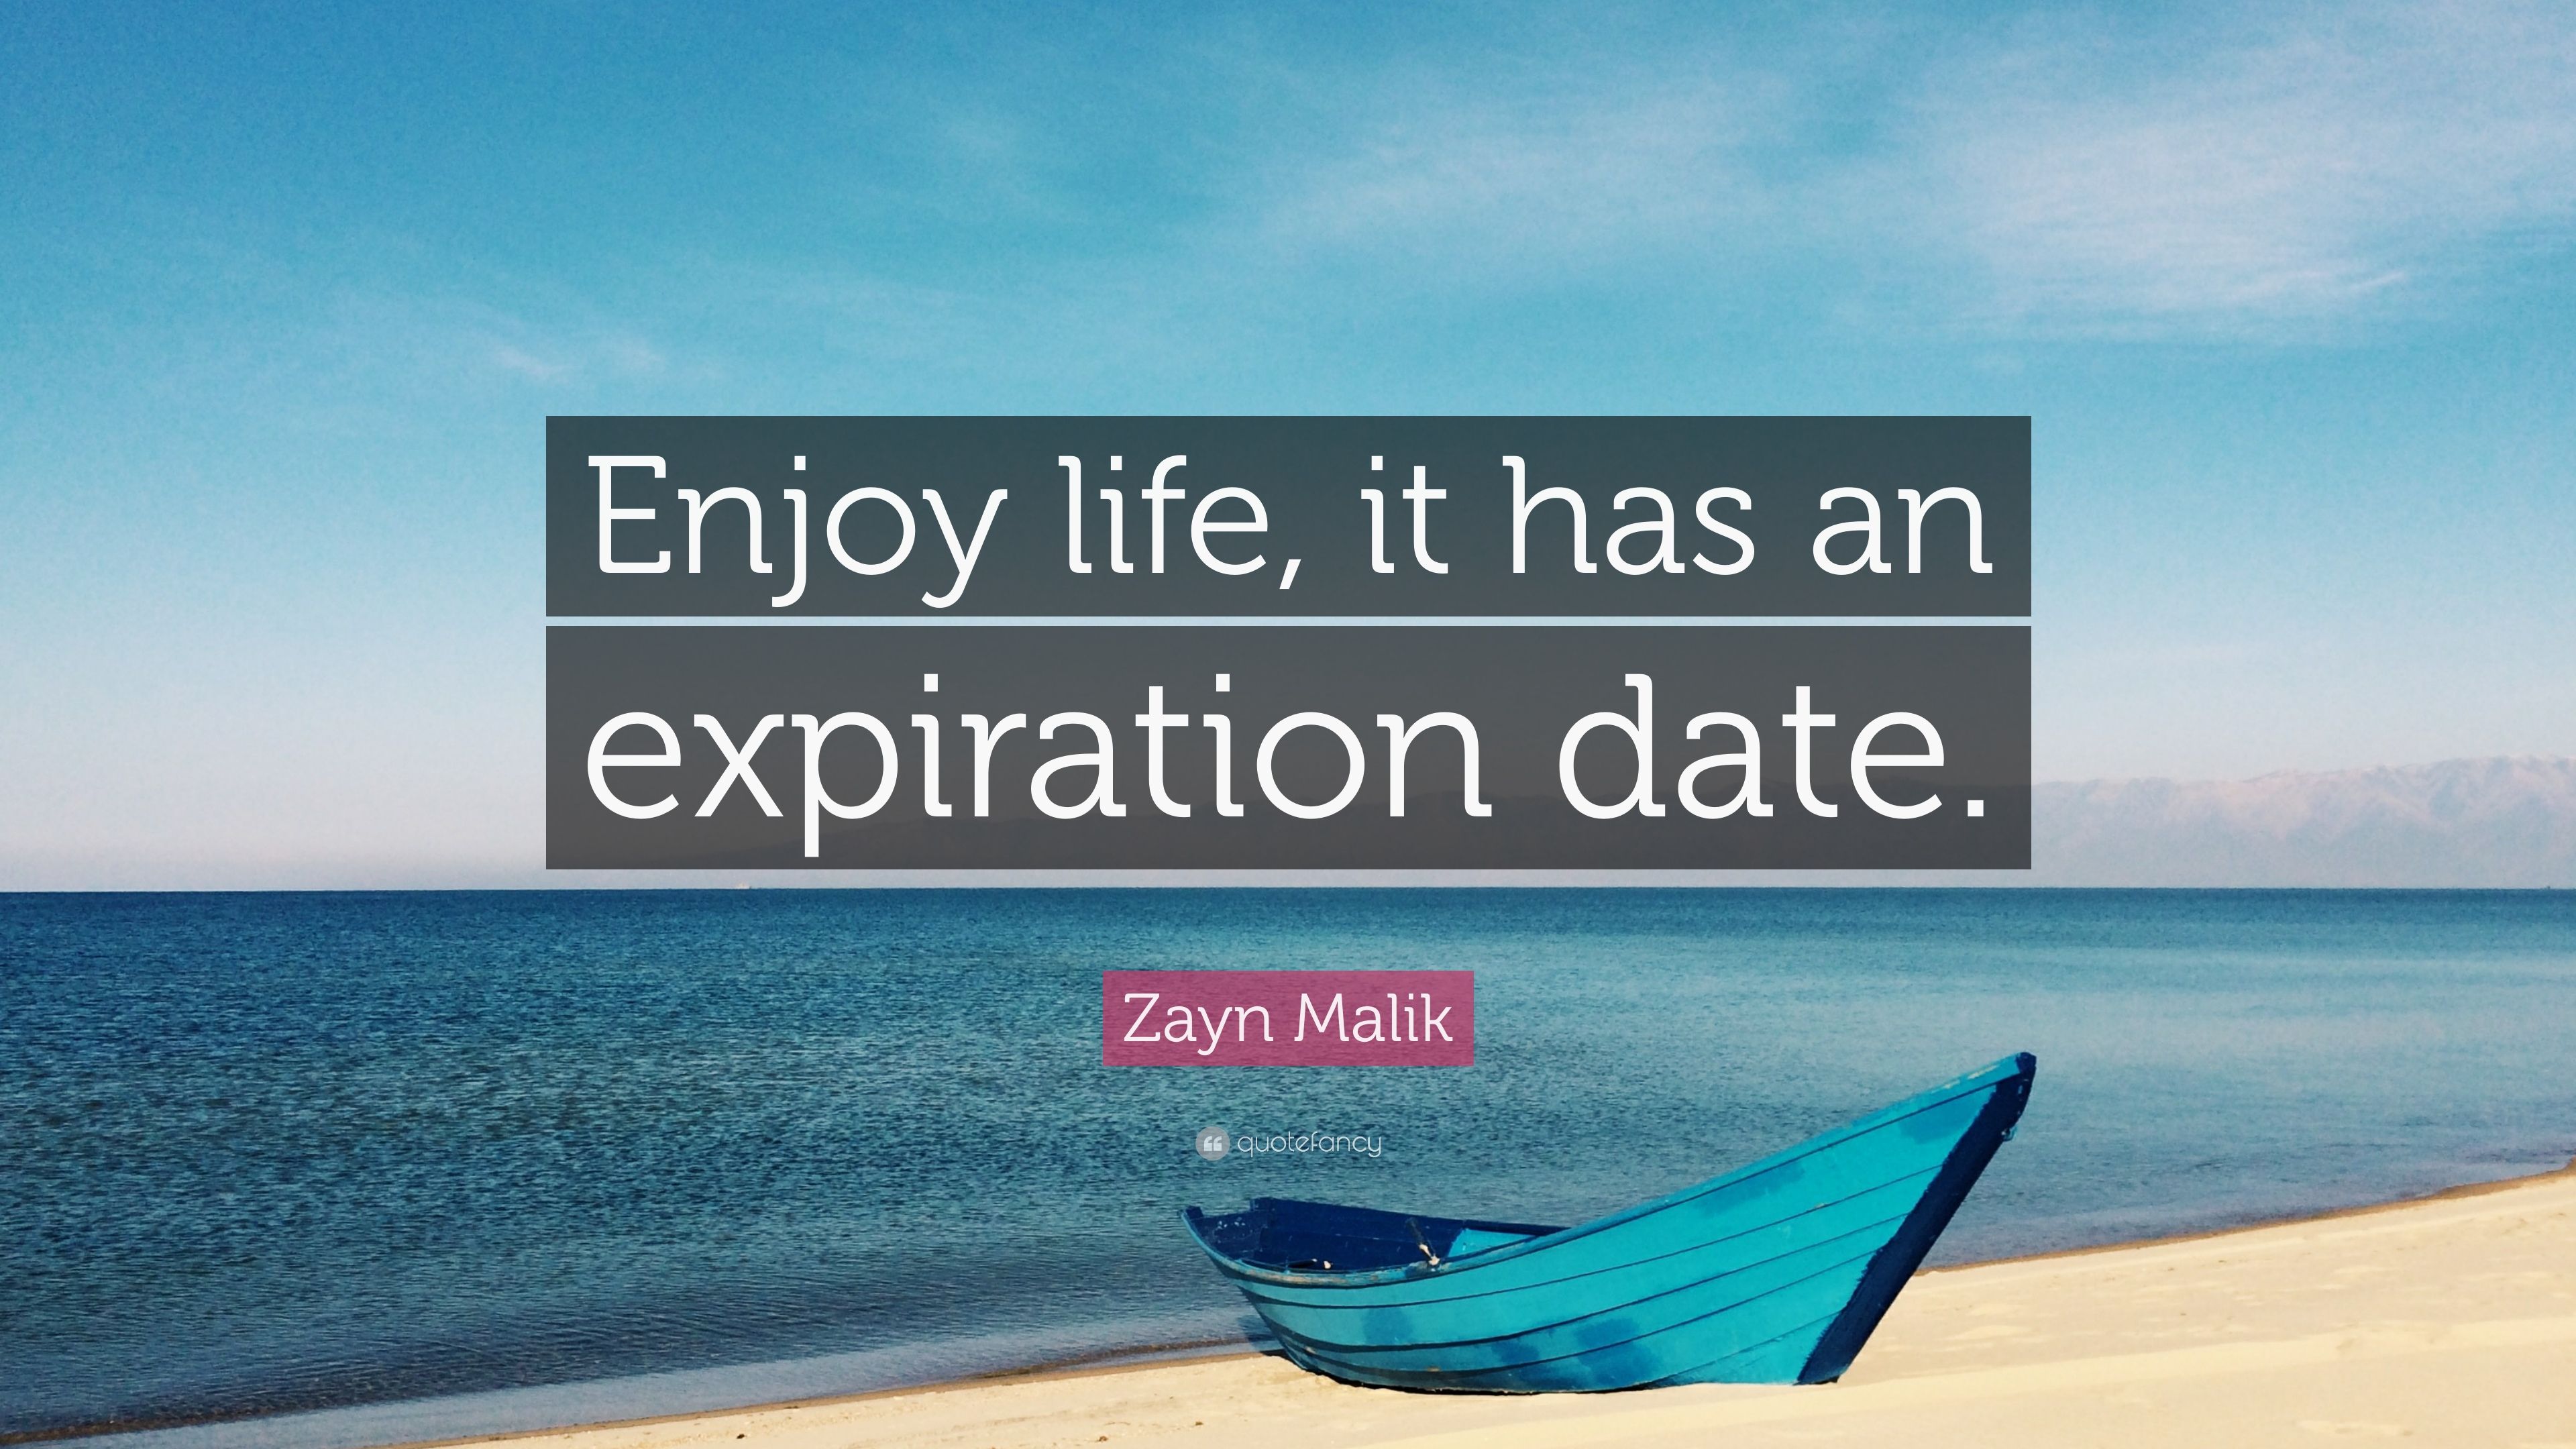 Zayn Malik Quote: “Enjoy life, it has an expiration date.” (12 wallpaper)